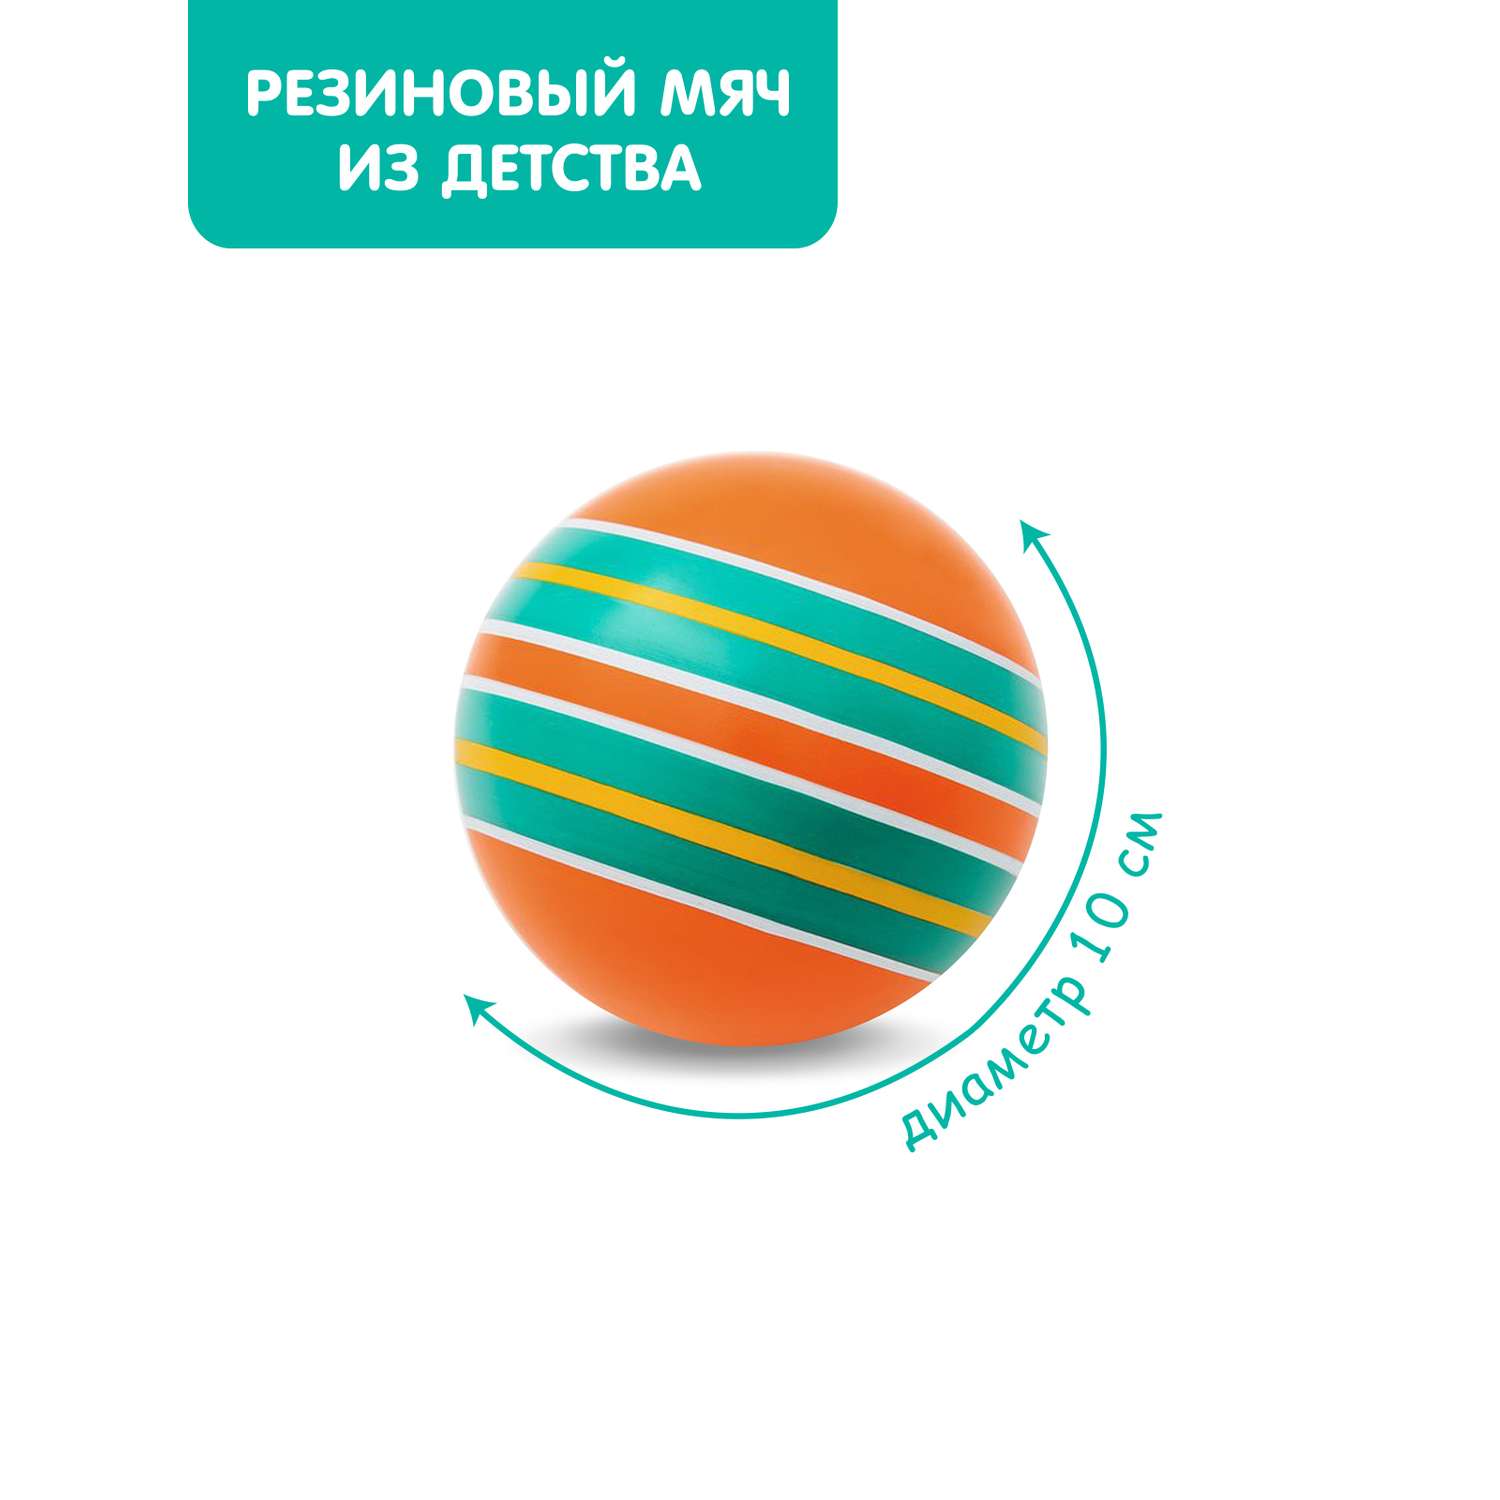 Мяч ЧАПАЕВ диаметр 100 мм Тропинки оранжевый фон бирюзовый полоски - фото 1